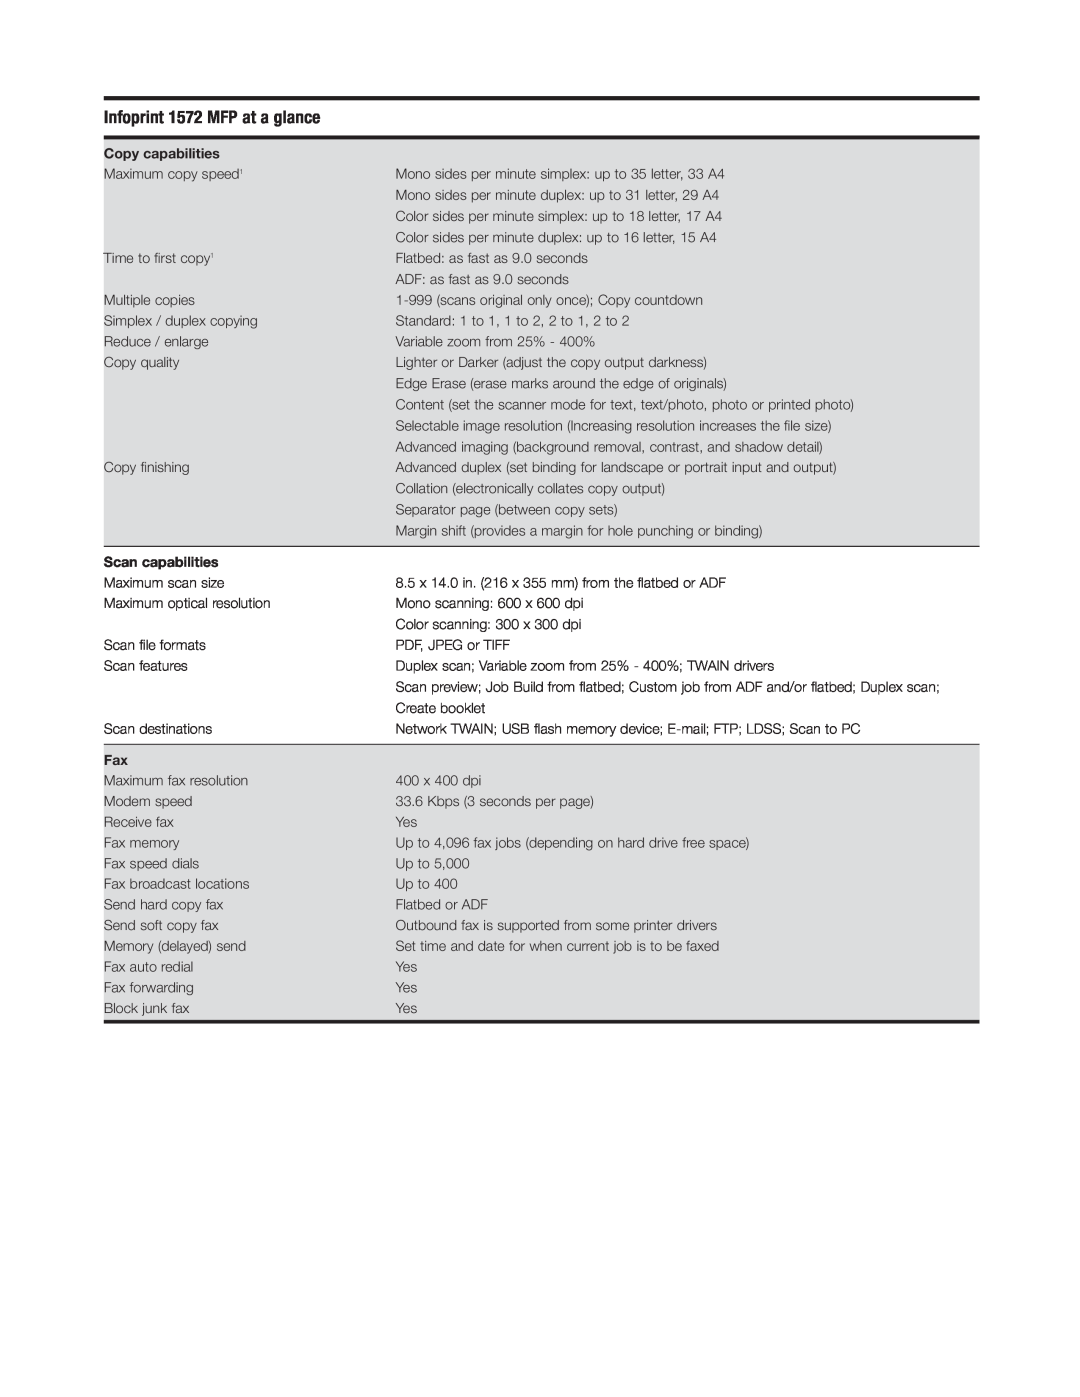 IBM manual Infoprint 1572 MFP at a glance, Copy capabilities, Scan capabilities 